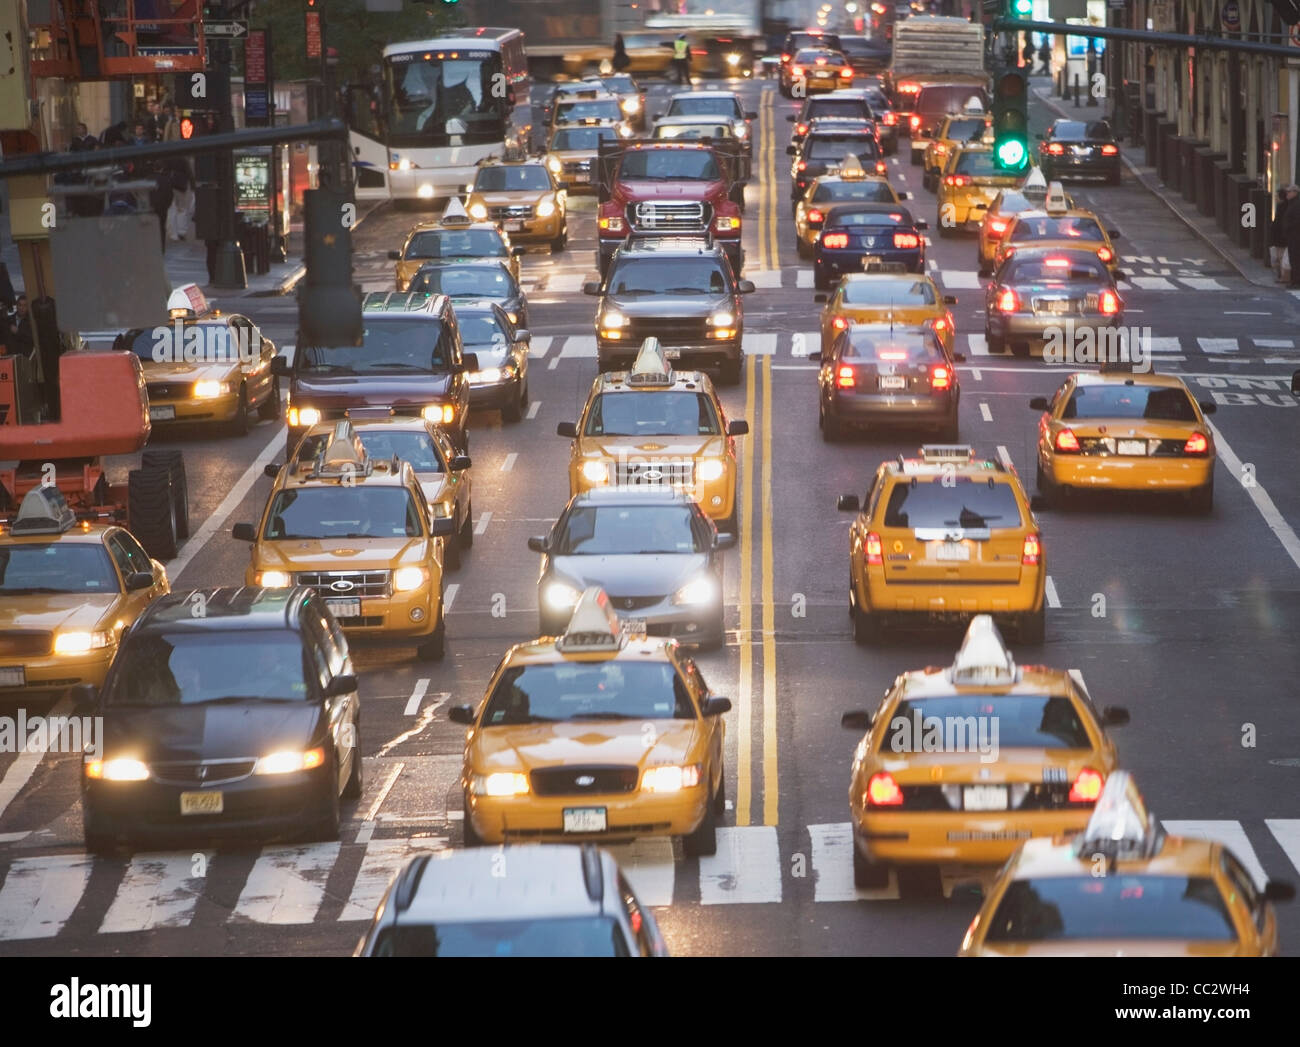 USA, New York City, Manhattan, Traffic stopped at zebra crossing on 42nd street Stock Photo